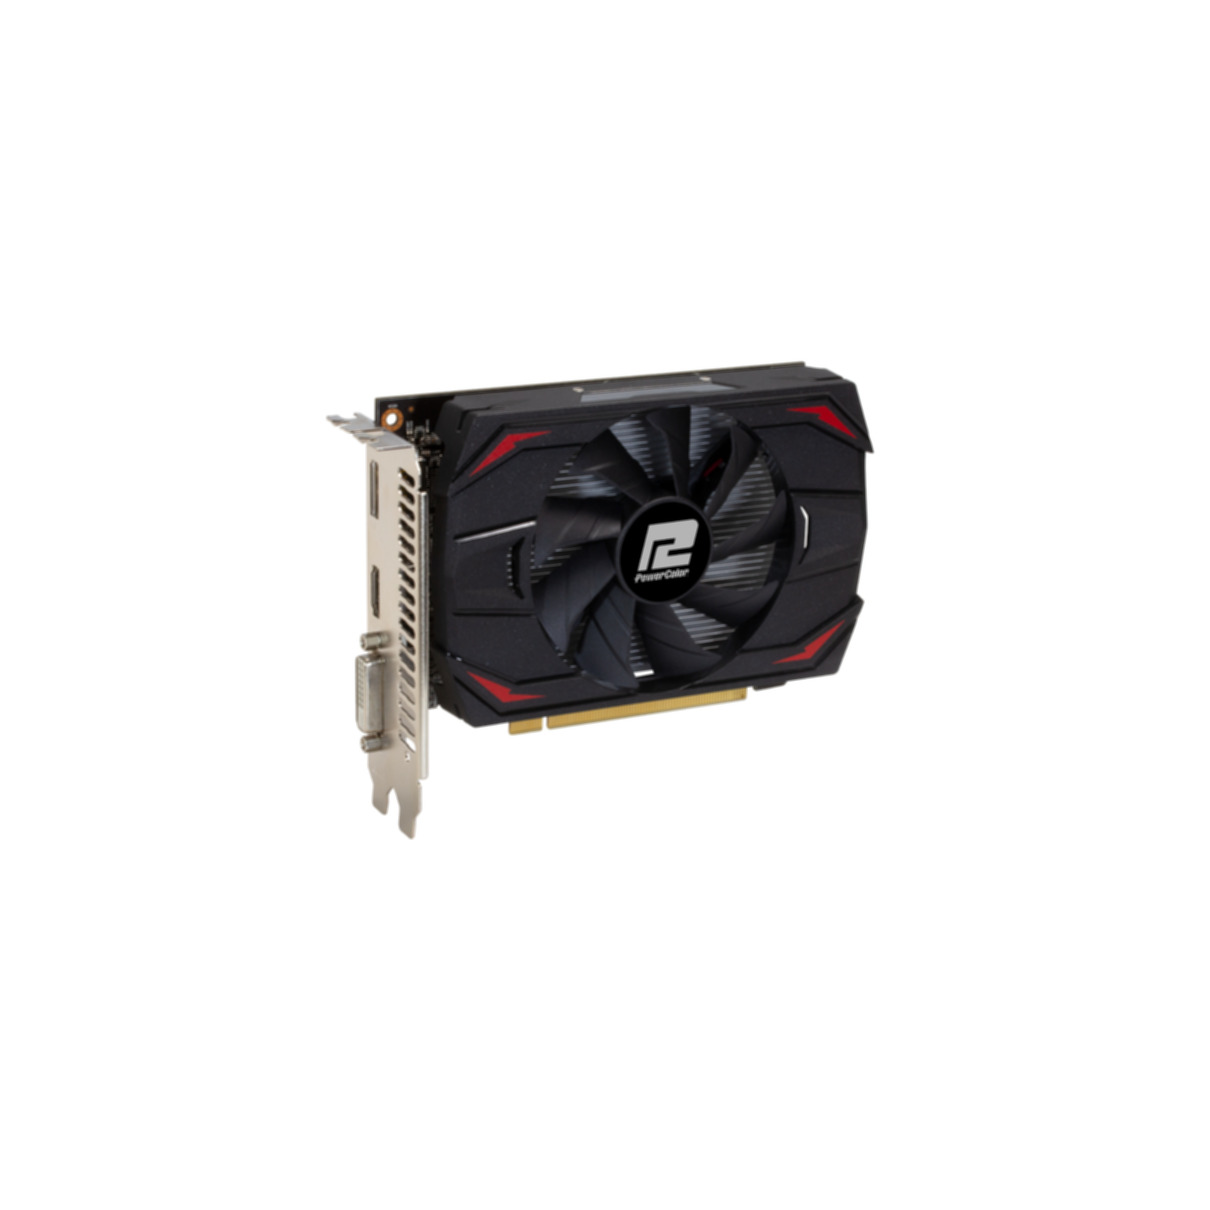 RX (AMD, Grafikkarte) POWERCOLOR Red 550 4GB Dragon